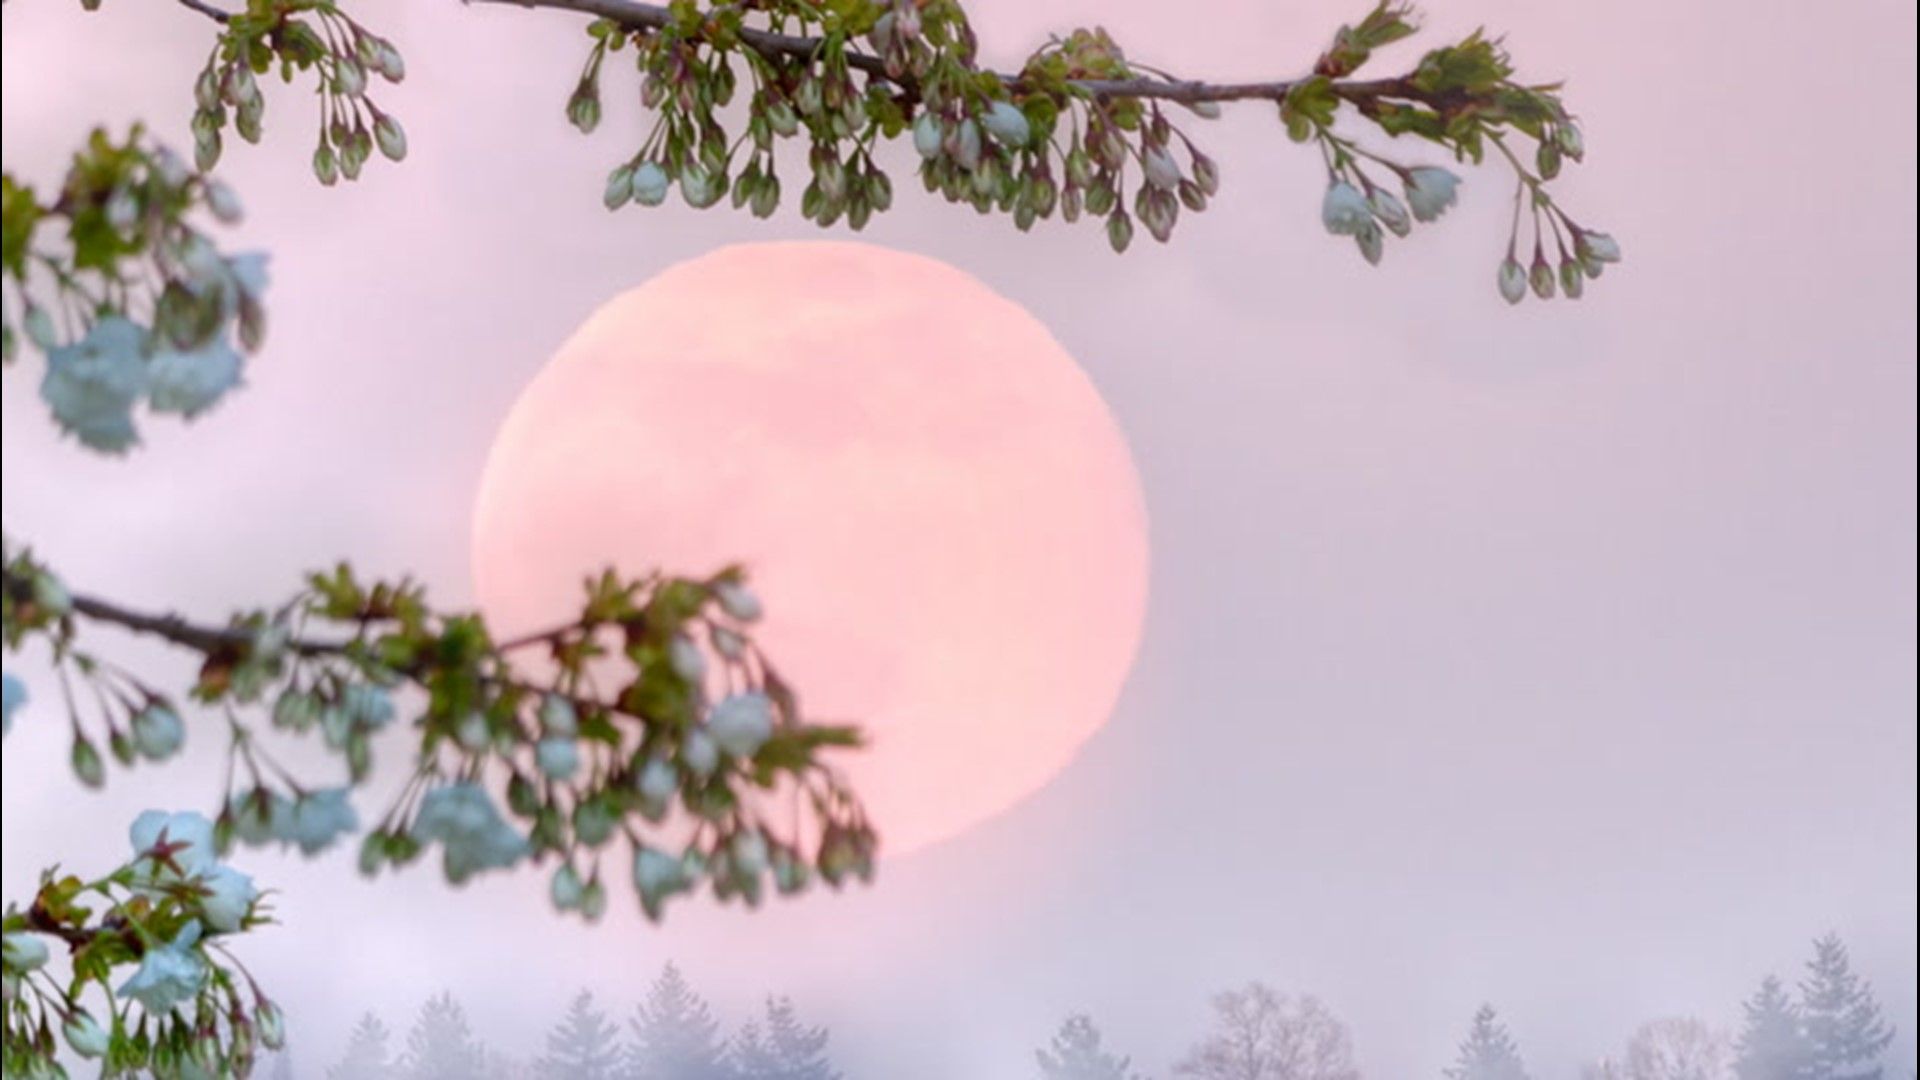 Catch the Super 'Pink' Moon on April 26tv.com